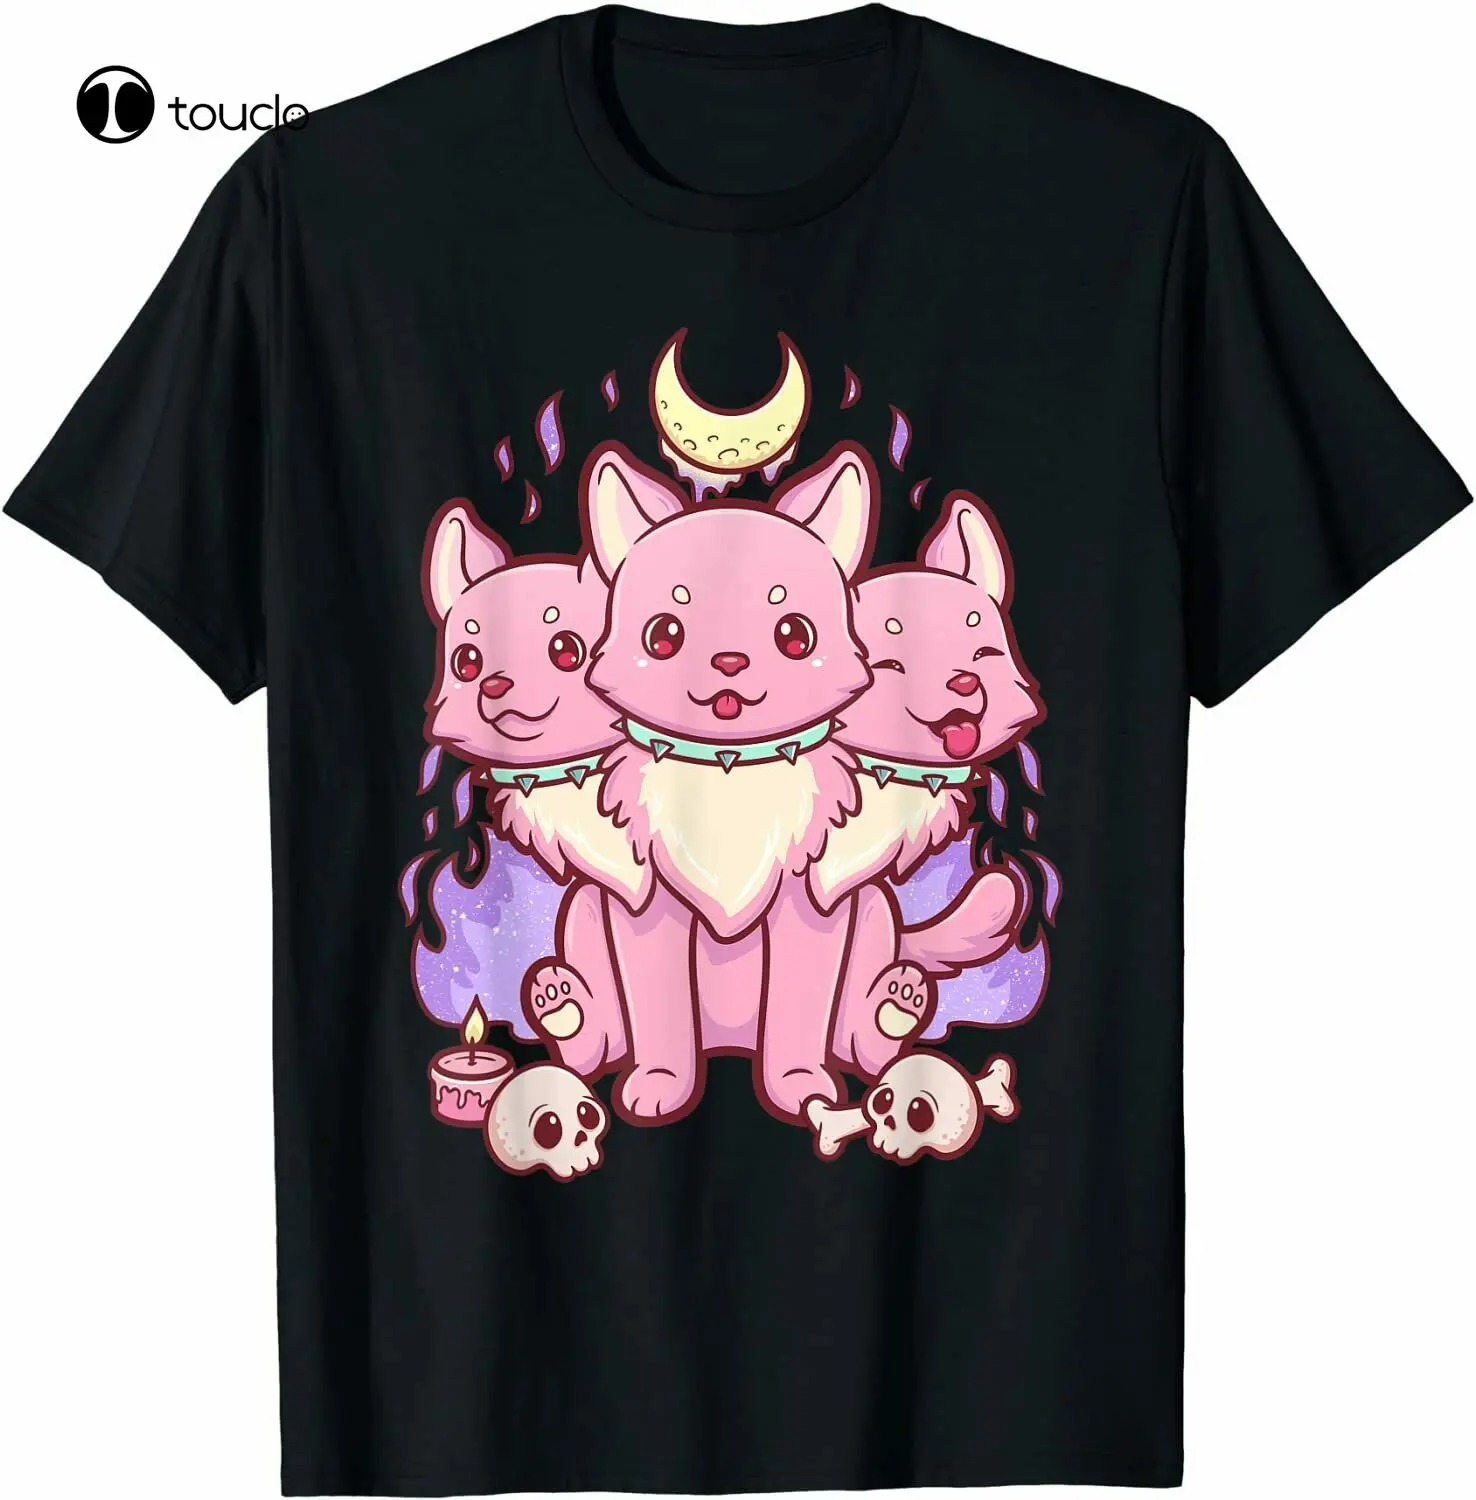 

Kawaii Pastel Goth Cute Creepy 3 Headed Dog T Shirt